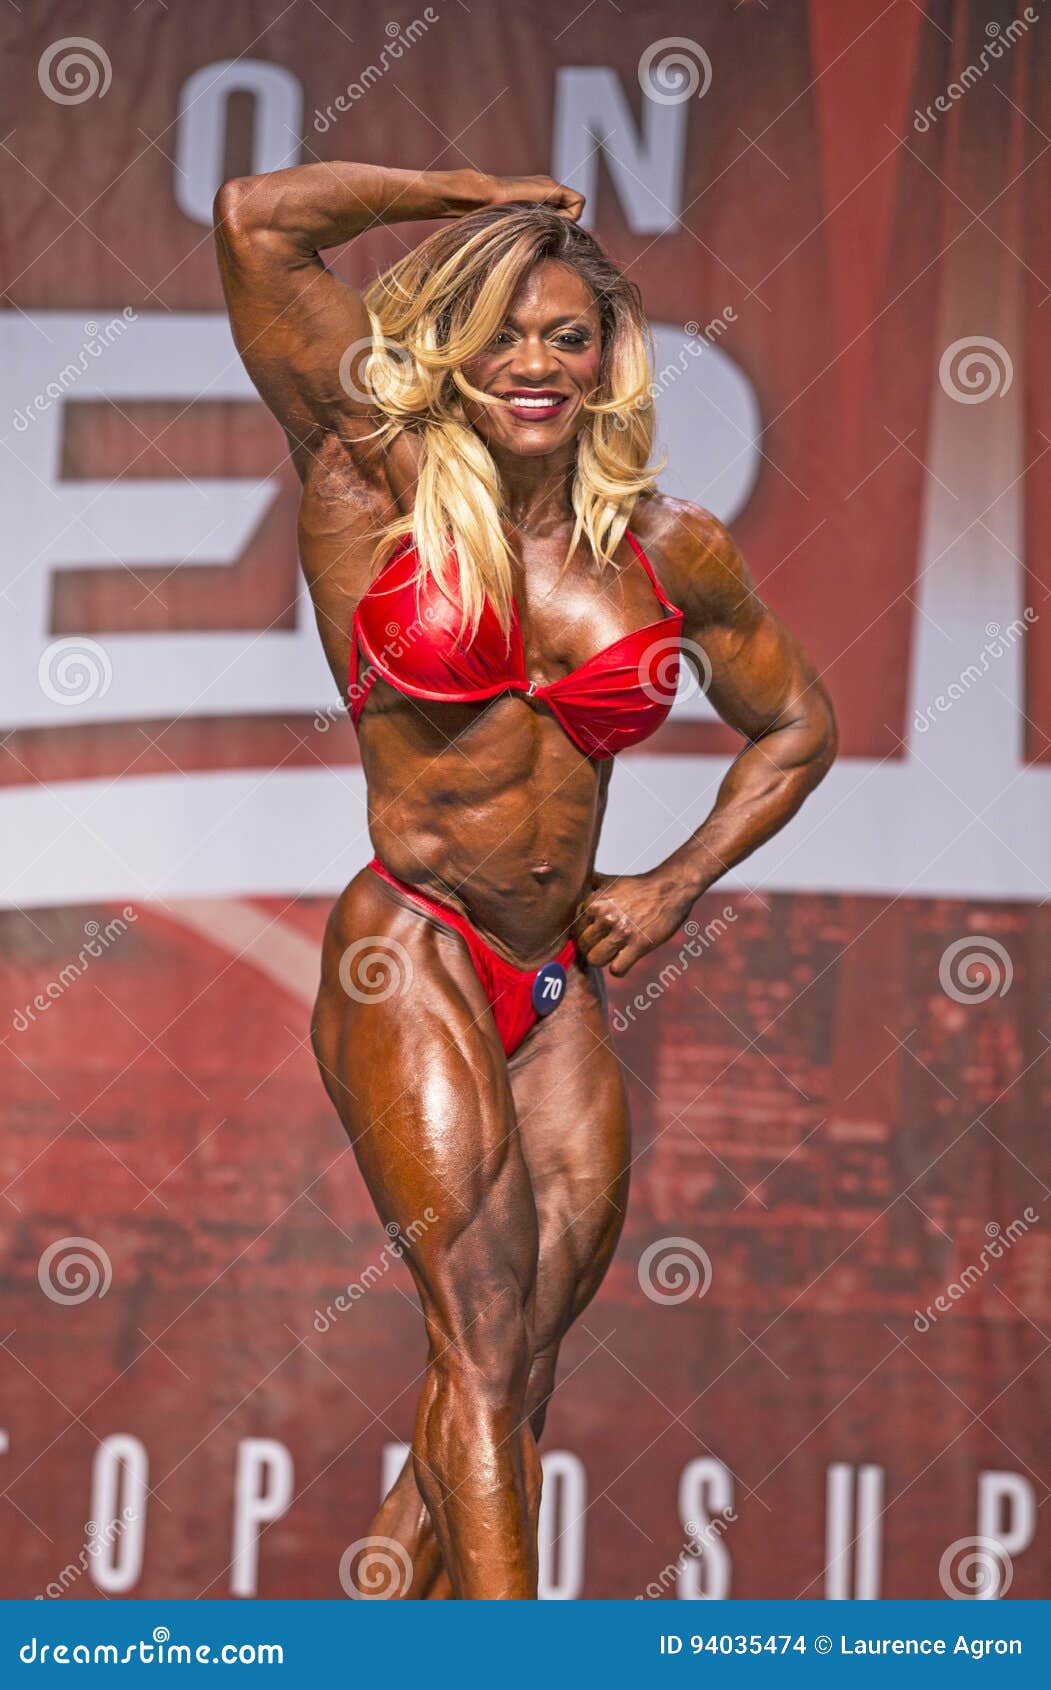 https://thumbs.dreamstime.com/z/woman-bodybuilder-flexes-to-toronto-pro-title-female-kim-buck-georgia-displays-powerful-defined-physique-as-wins-94035474.jpg